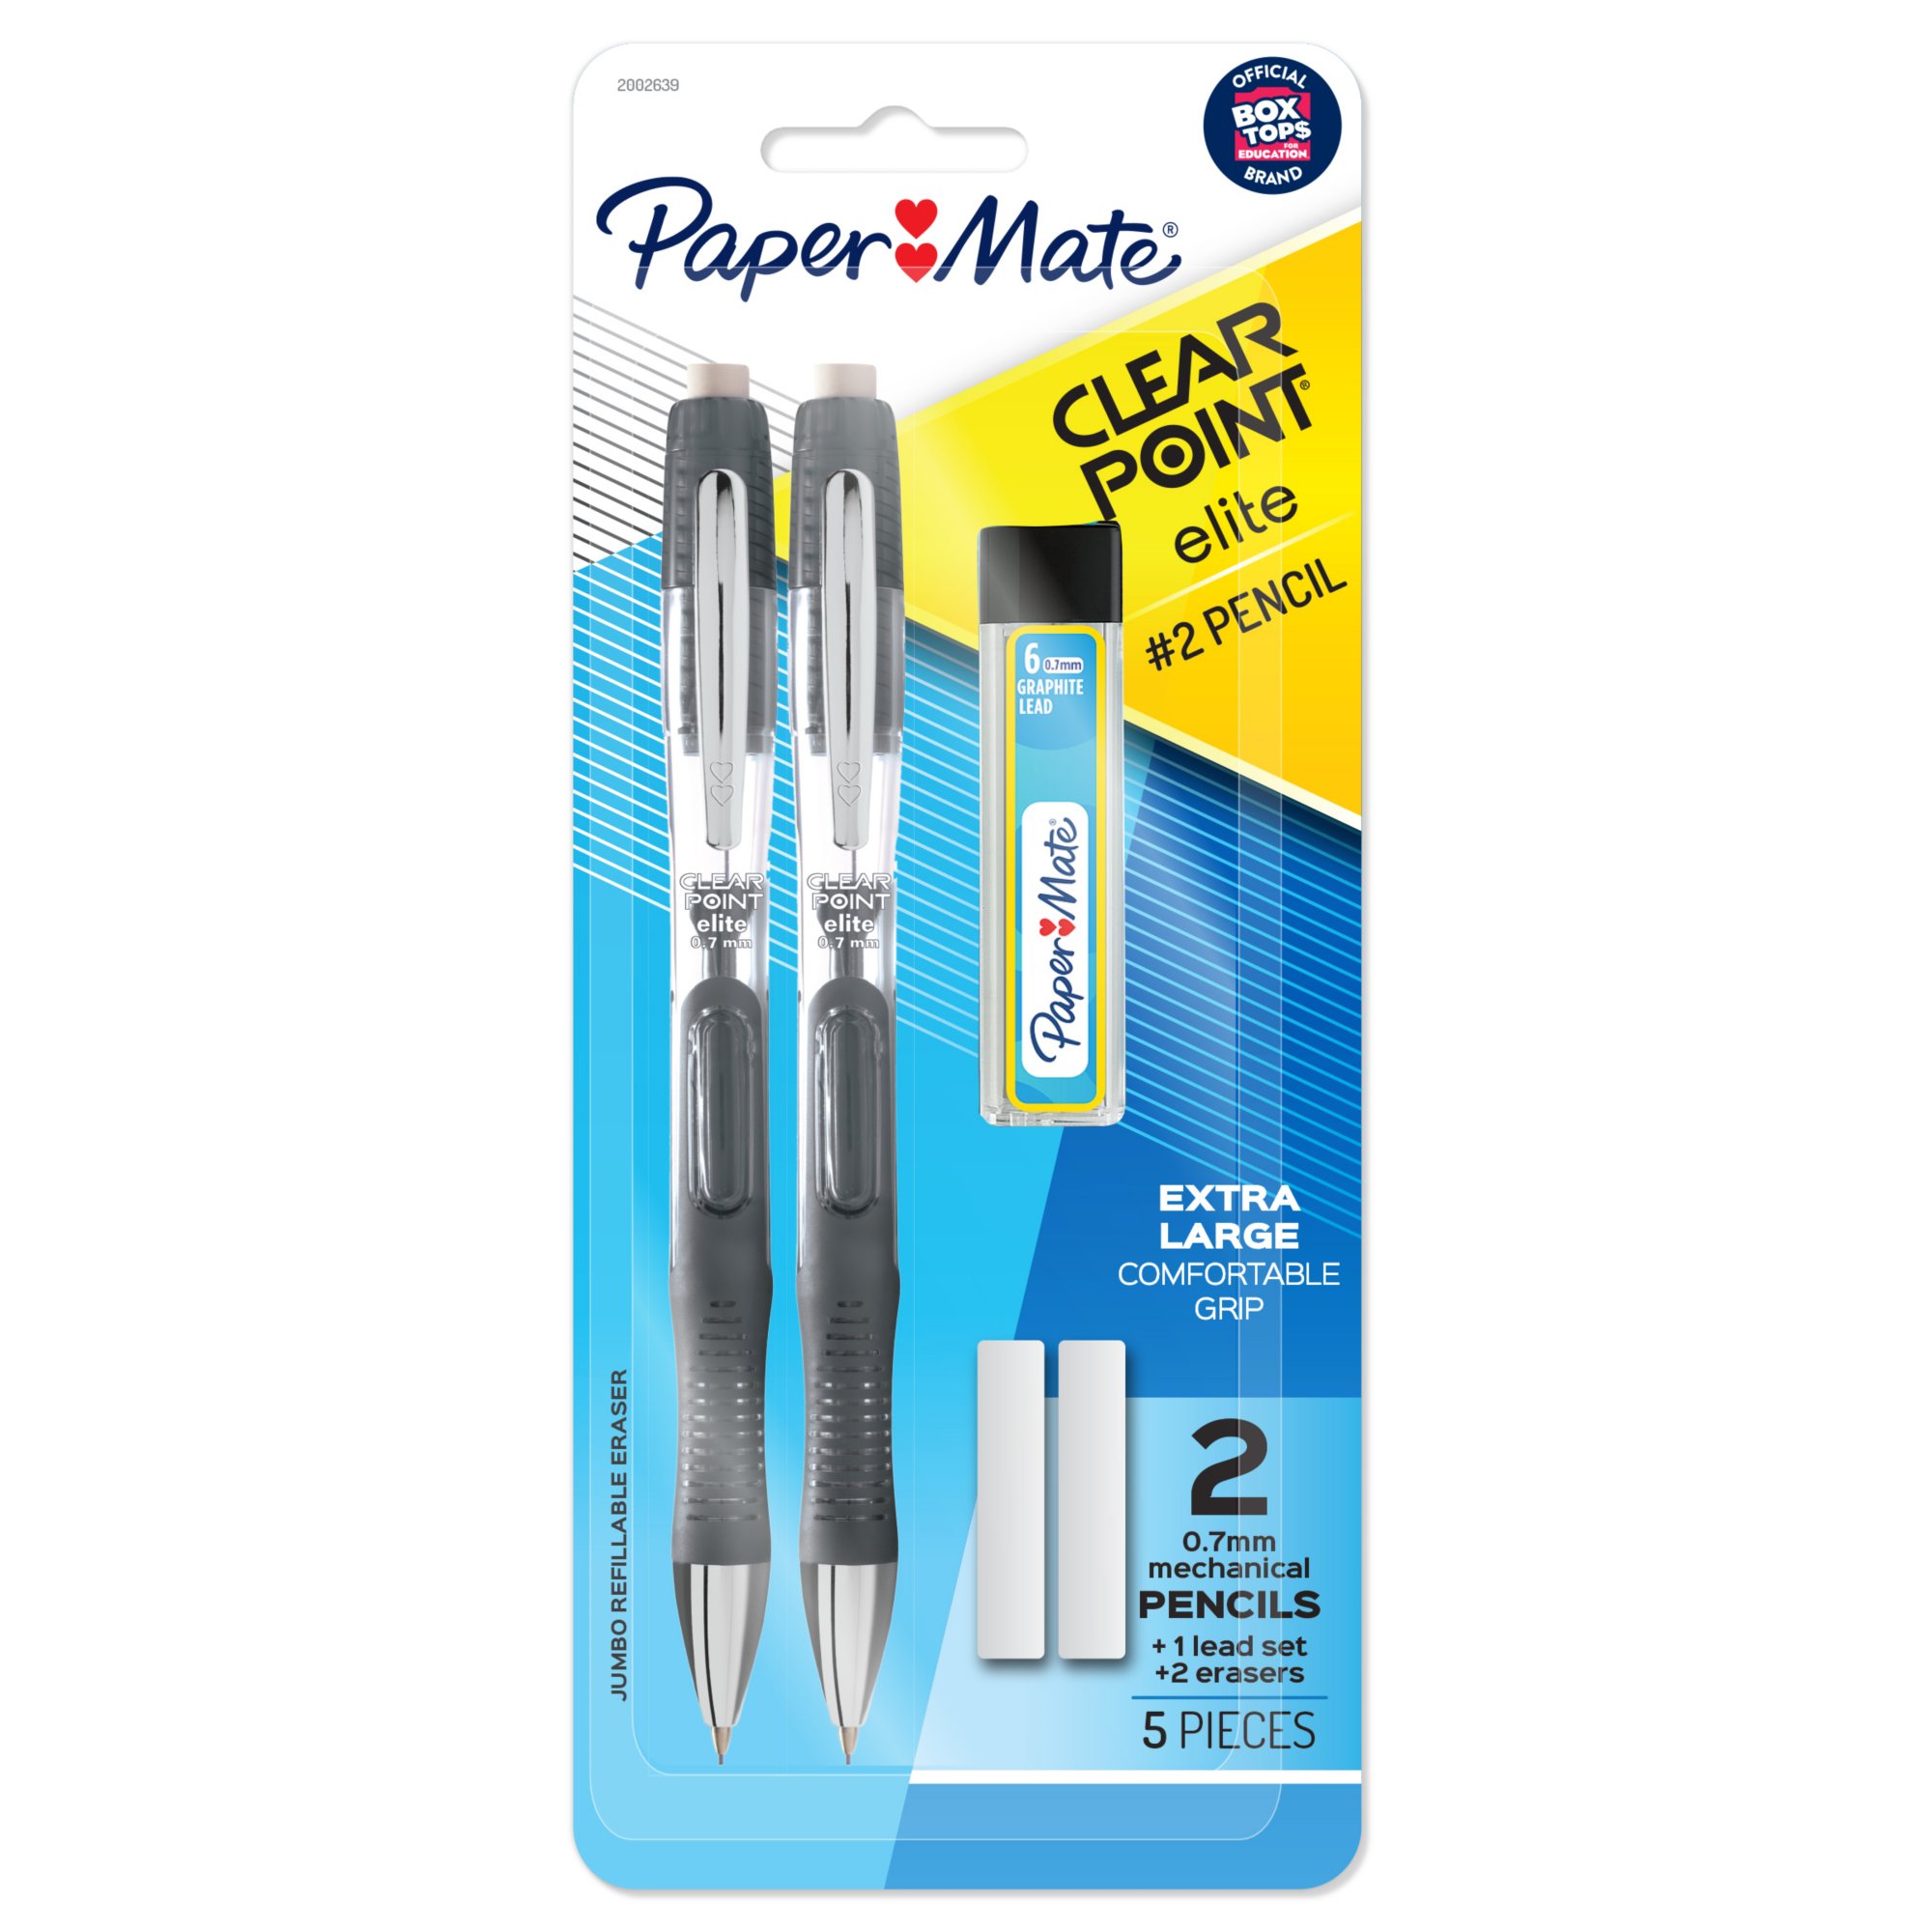 Mr. Pen- Refill Erasers for Mechanical Pencils